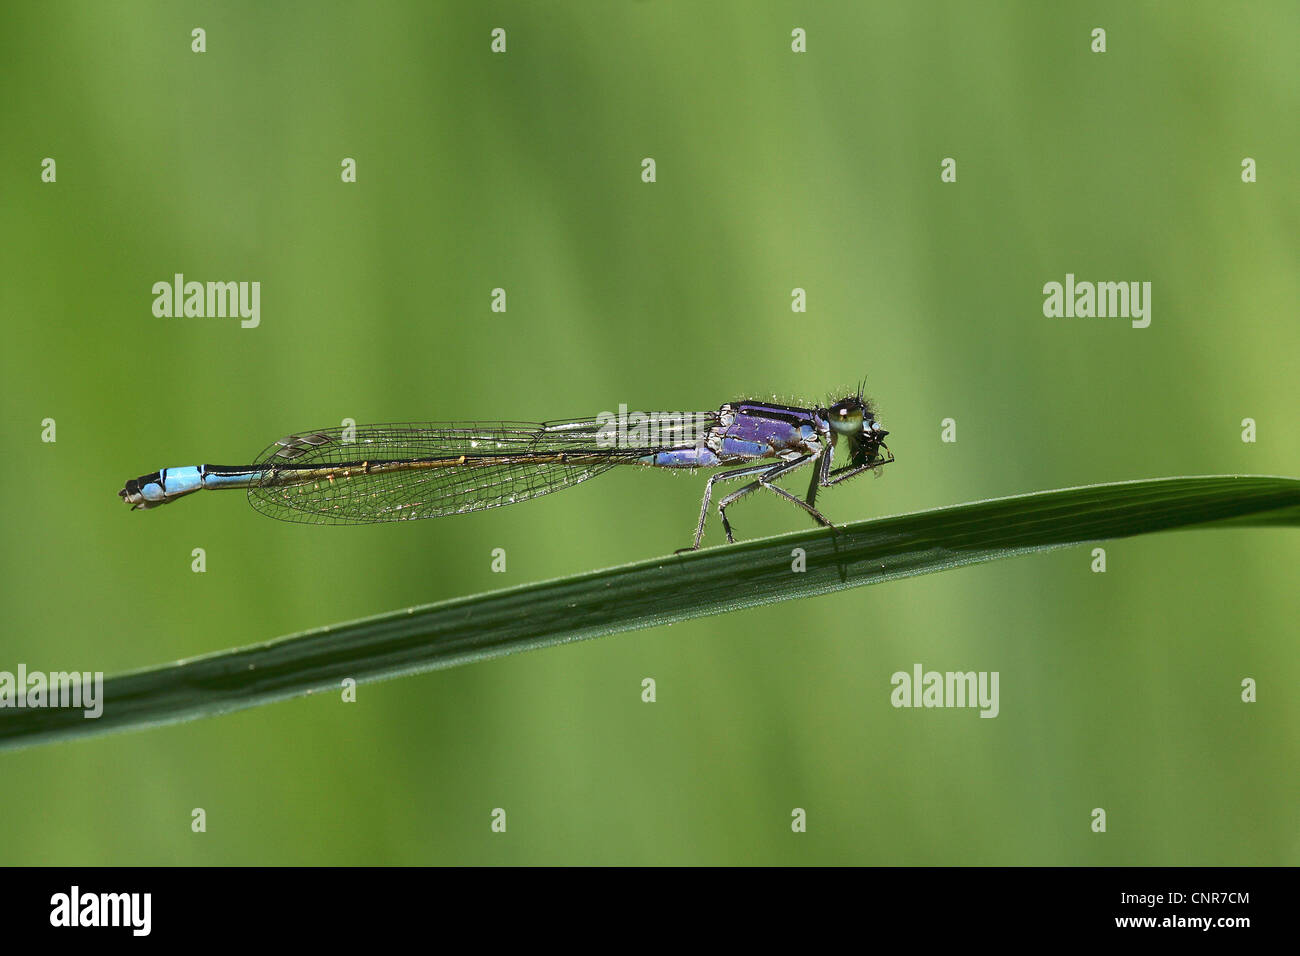 common ischnura, blue-tailed damselfly (Ischnura elegans), on blade of grass, Germany, Rhineland-Palatinate Stock Photo